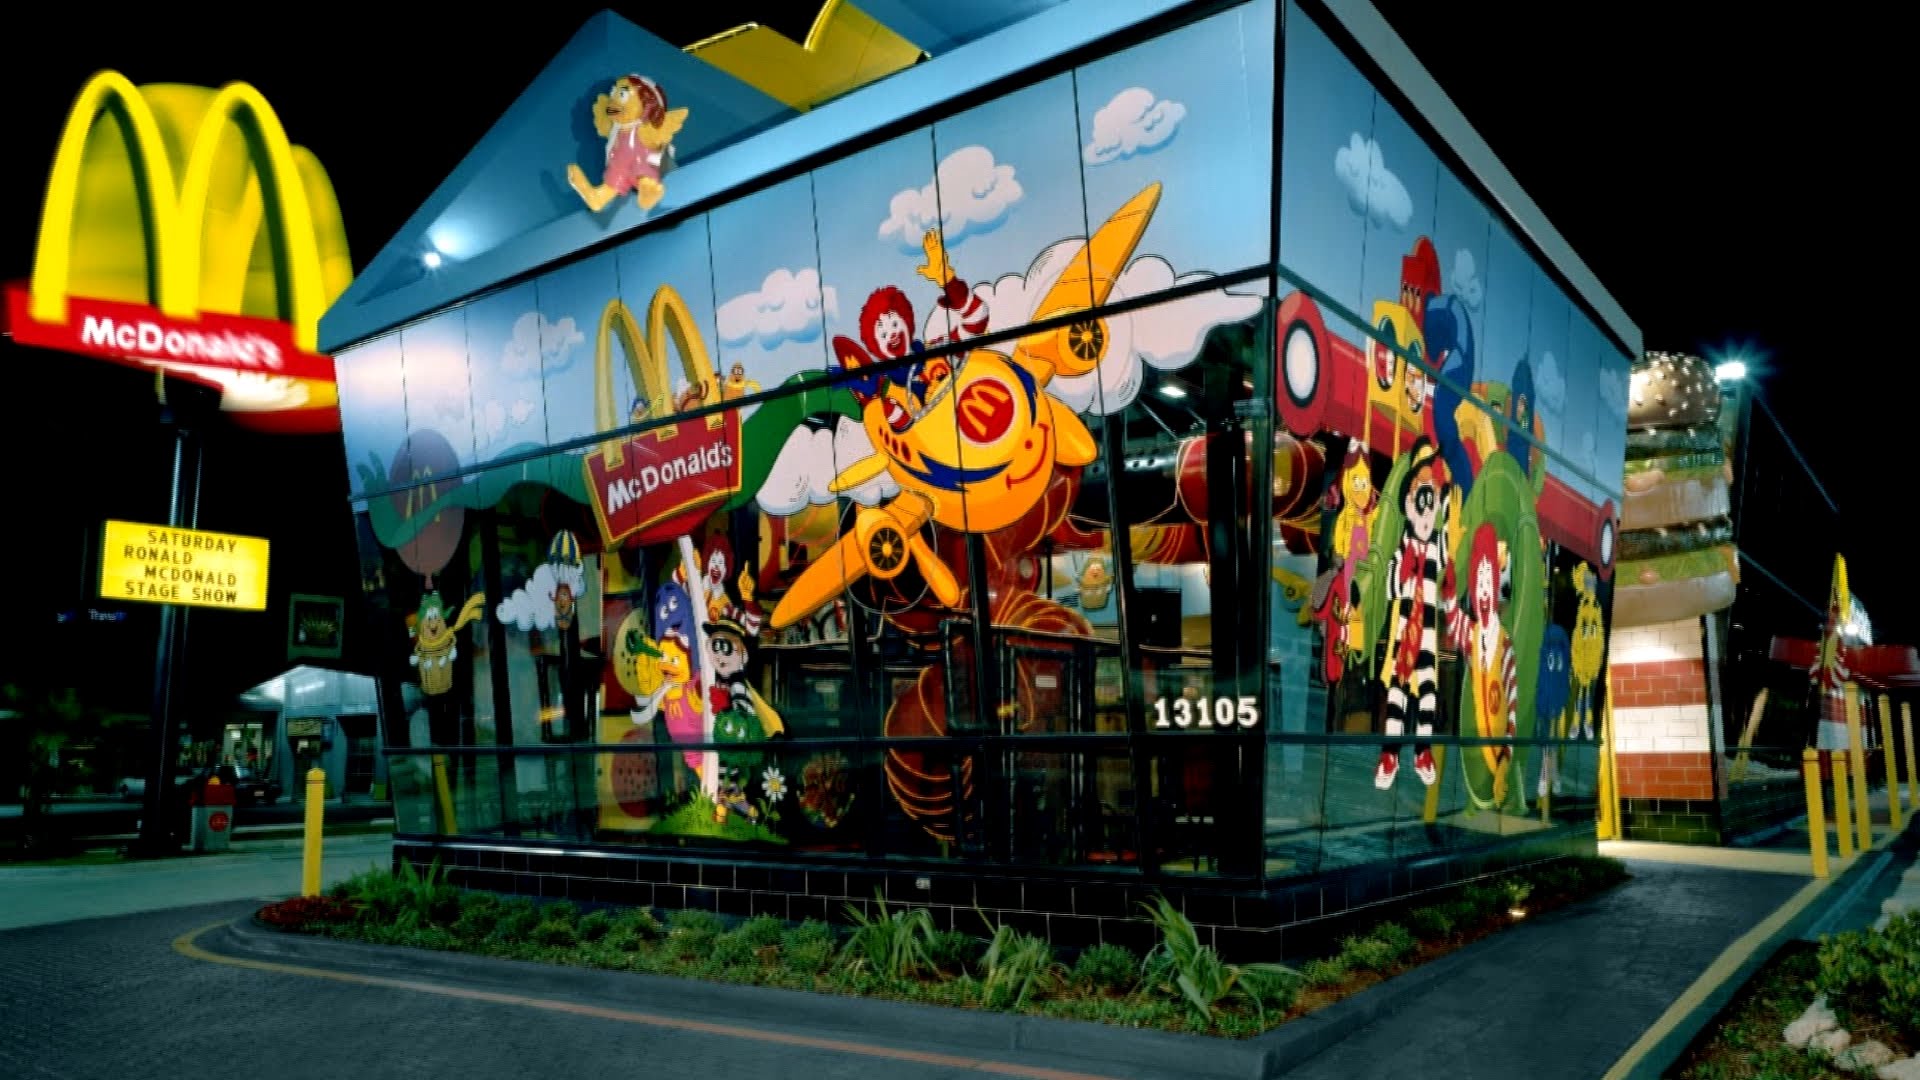 Five of the World's Most Unusual McDonald's Restaurants - YouTube